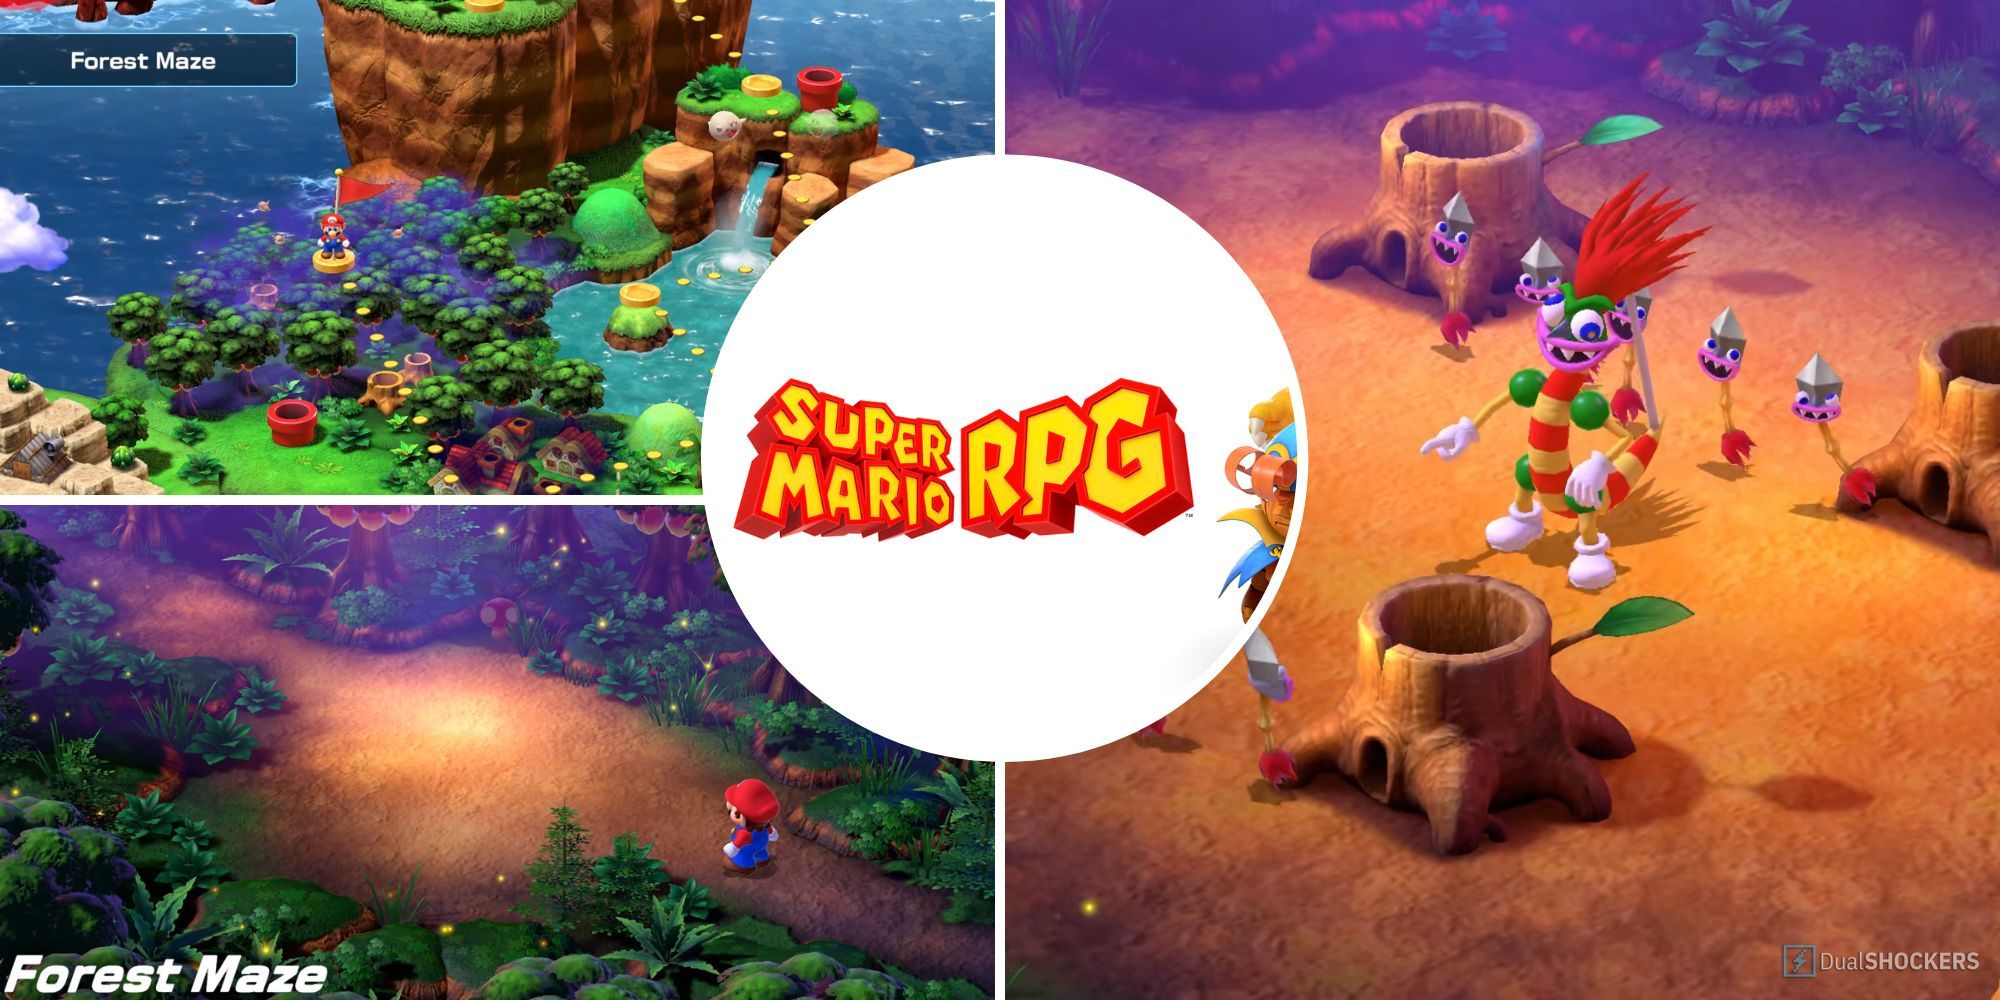 Super Mario RPG - The Forest Maze Split Image